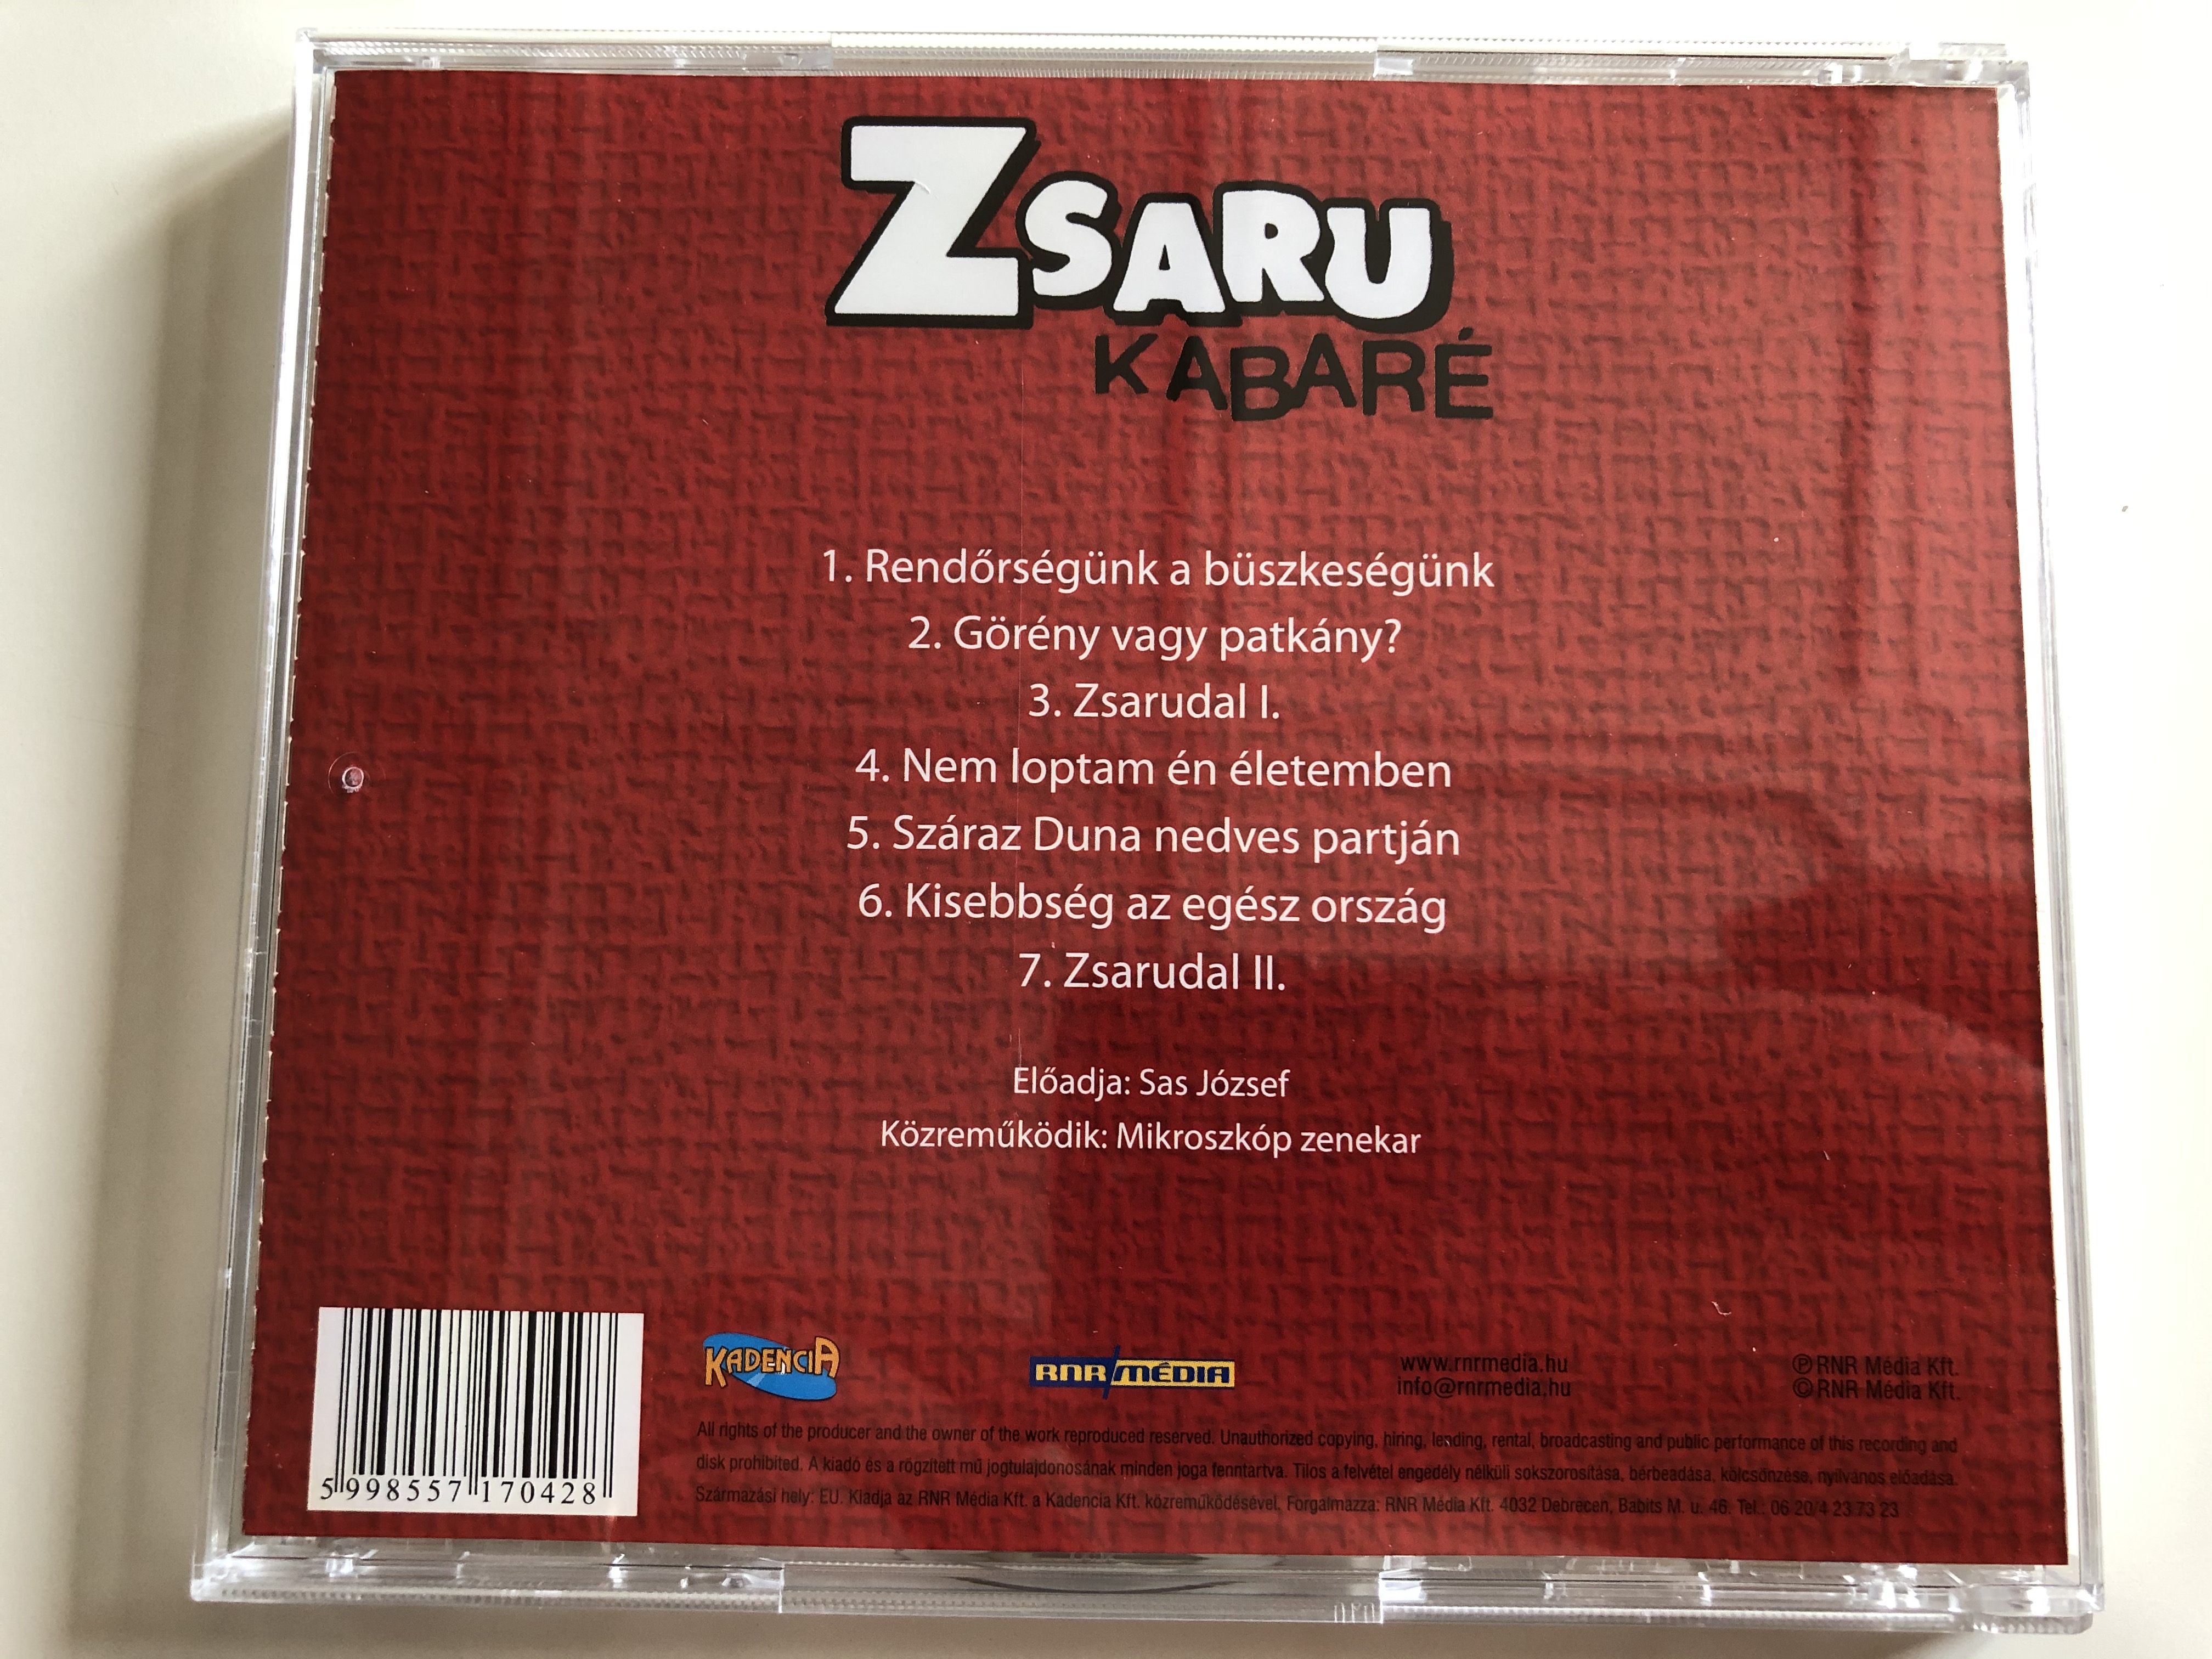 sas-j-zsef-zsaru-kabar-rnr-media-kft.-audio-cd-1997-07042-rnr-4-.jpg